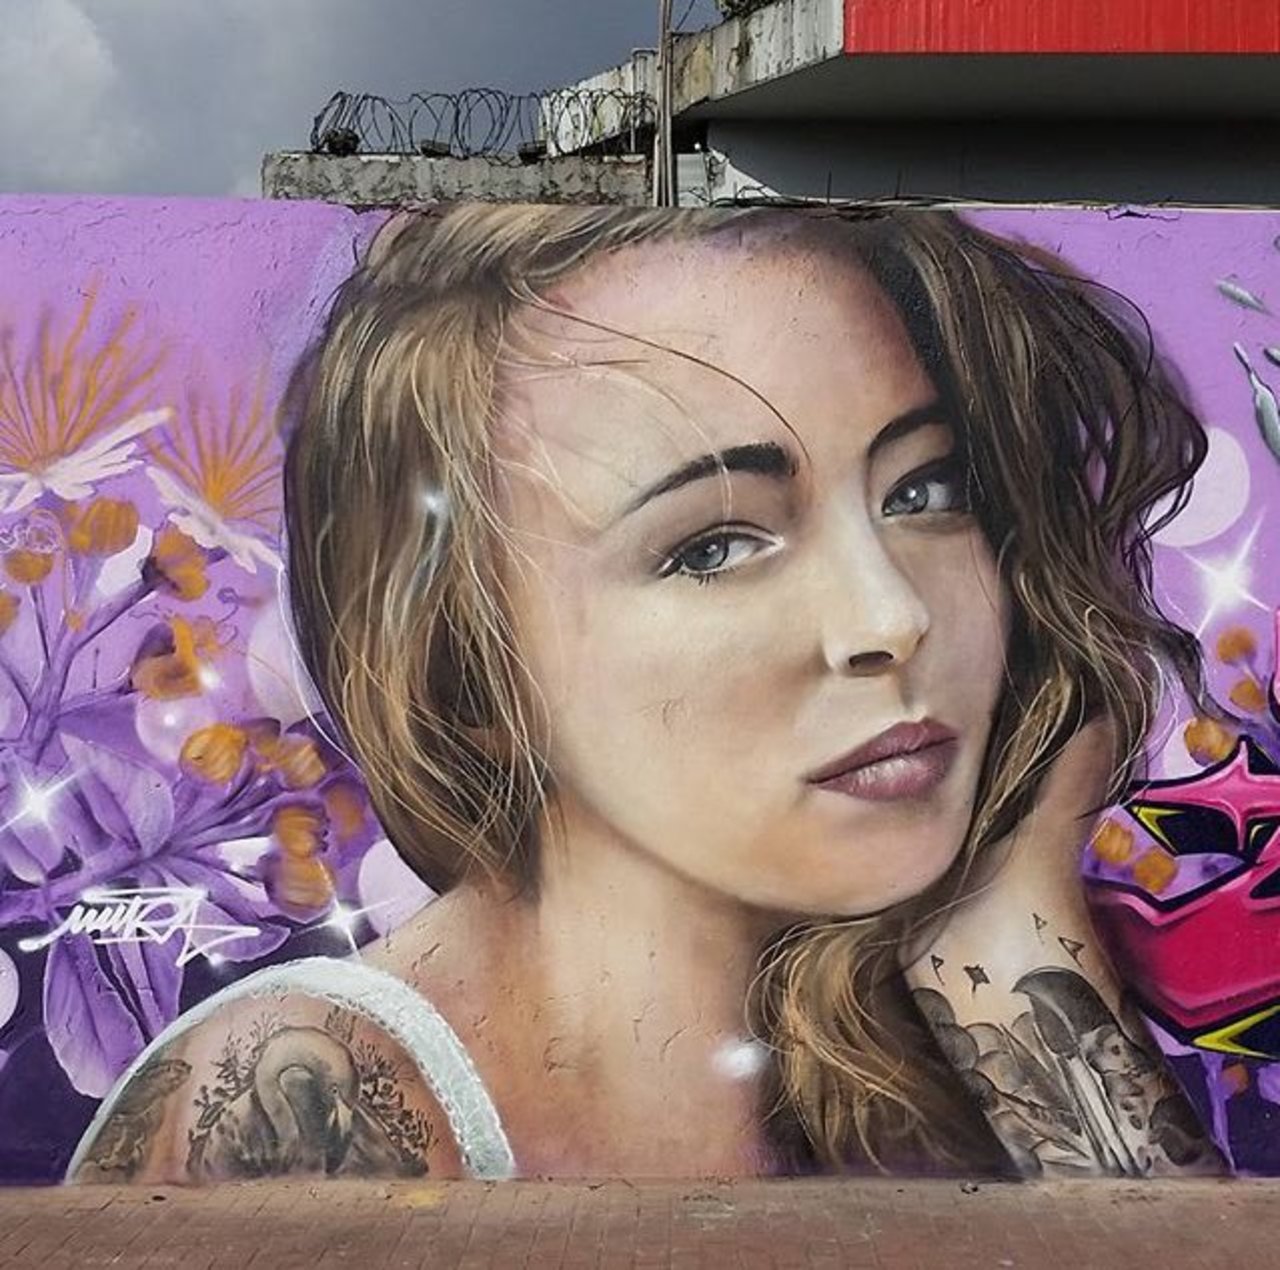 New Street Art by Mantarea 

#art #graffiti #mural #streetart https://t.co/ea7L4908t7